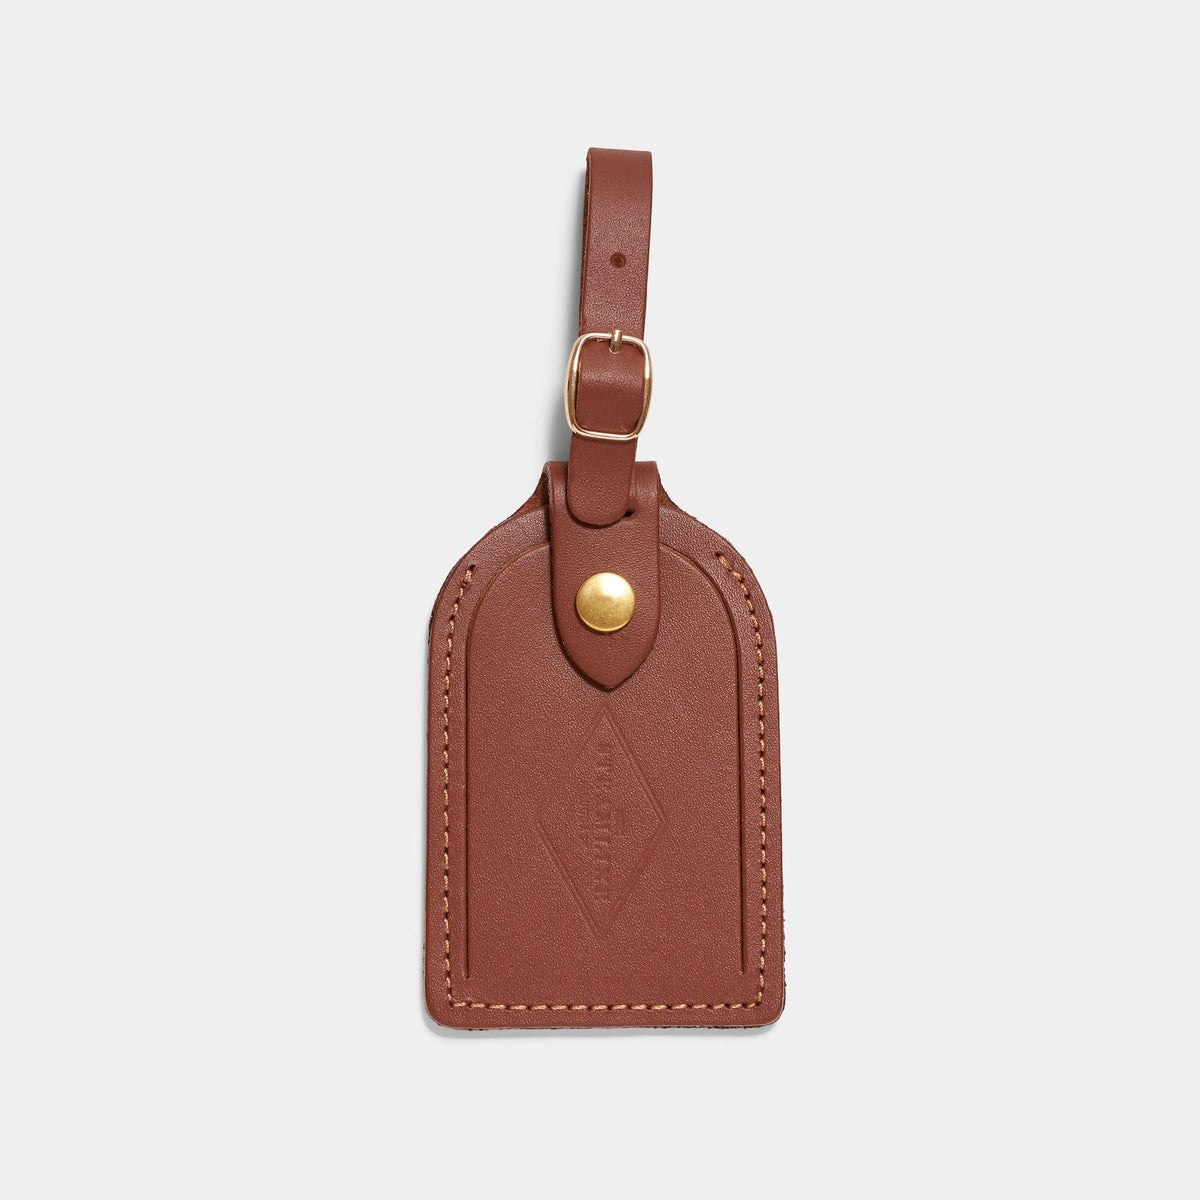 Pioneer Top Grain Brown Leather - Luggage Tag